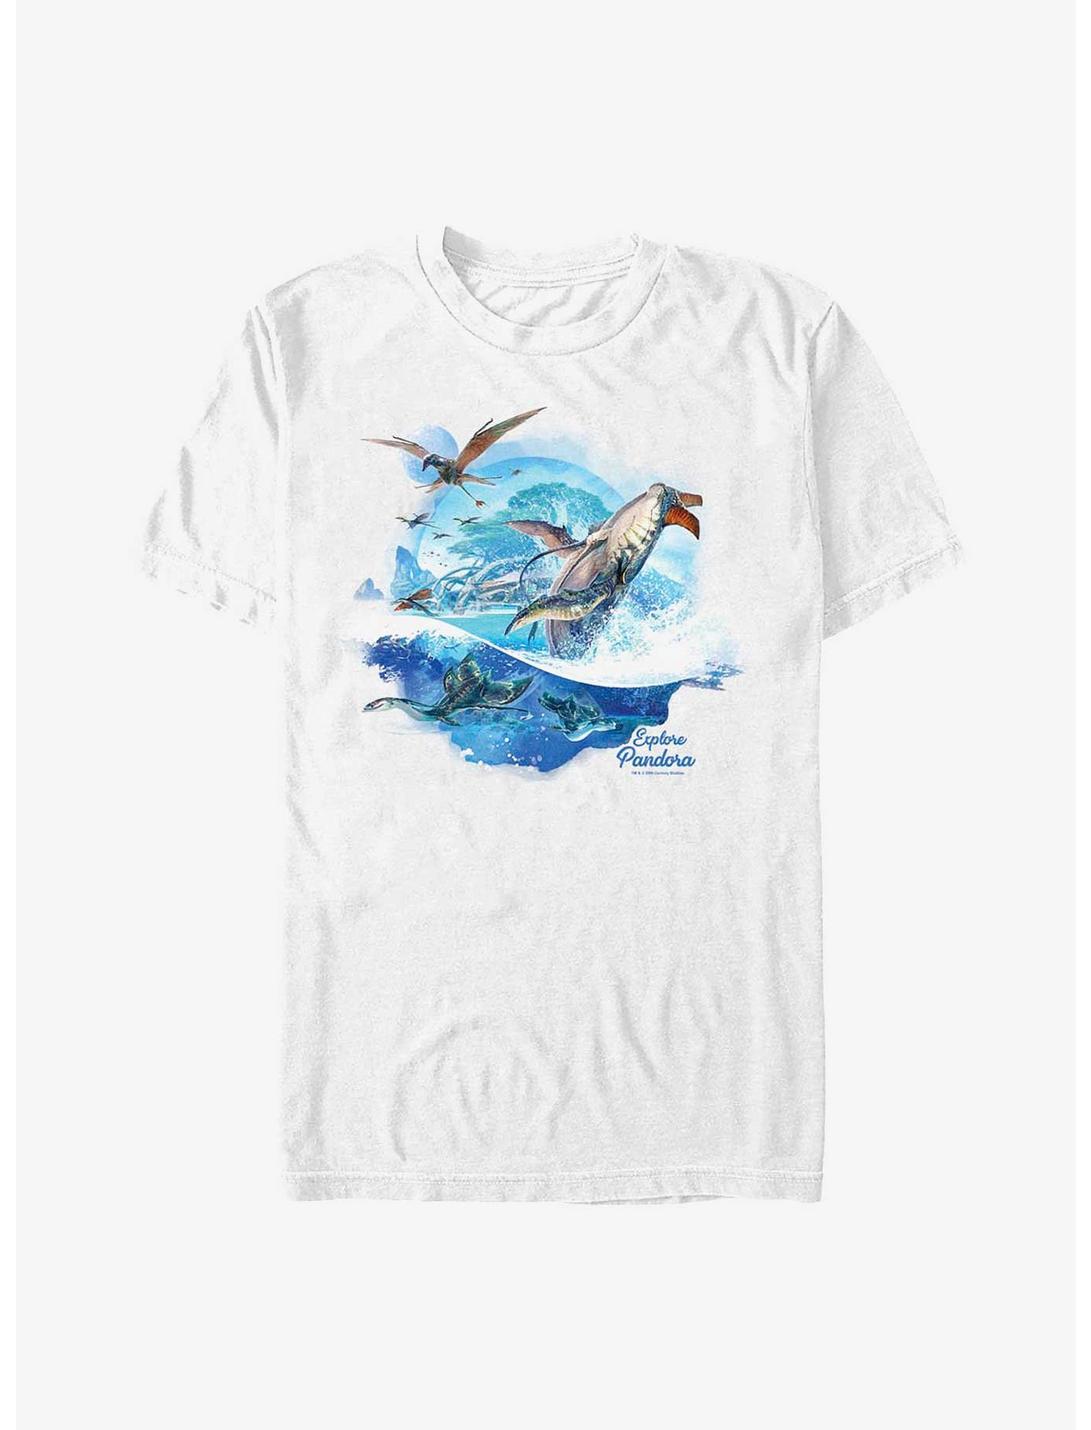 Avatar: The Way Of The Water Explore Pandora T-Shirt, WHITE, hi-res